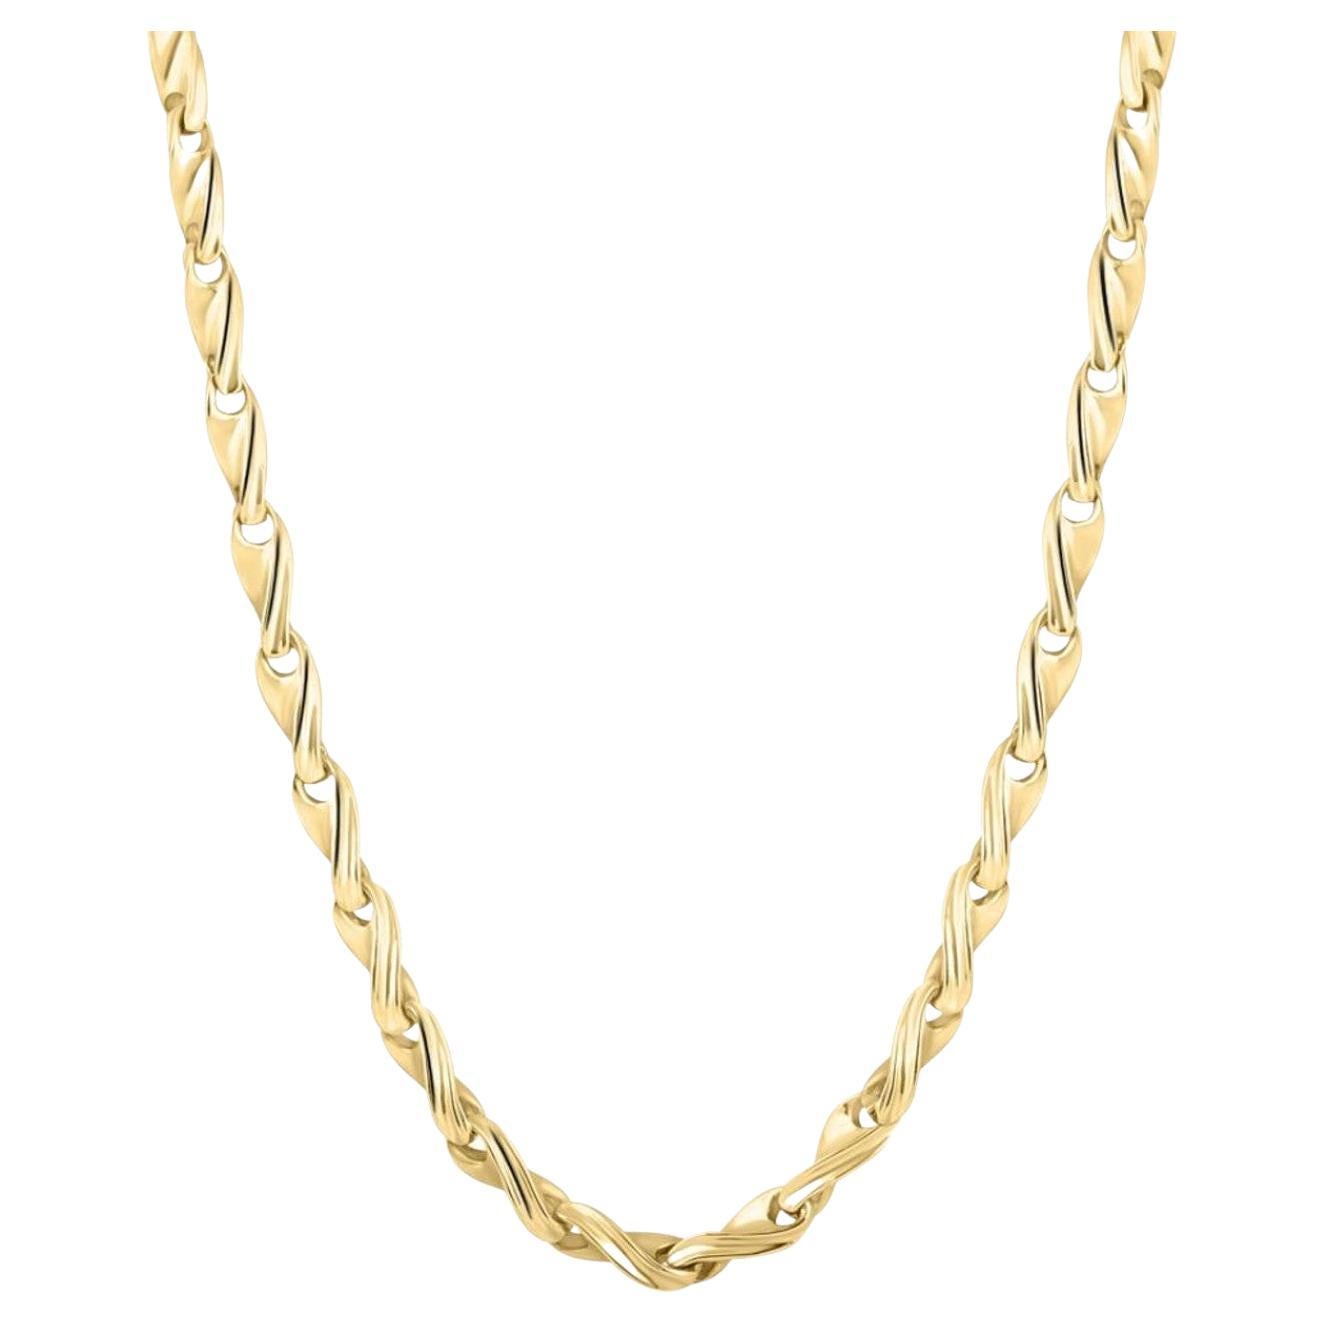 Braccio Solid 14k Yellow Gold Men's Chain Necklace 50.9 Grams For Sale